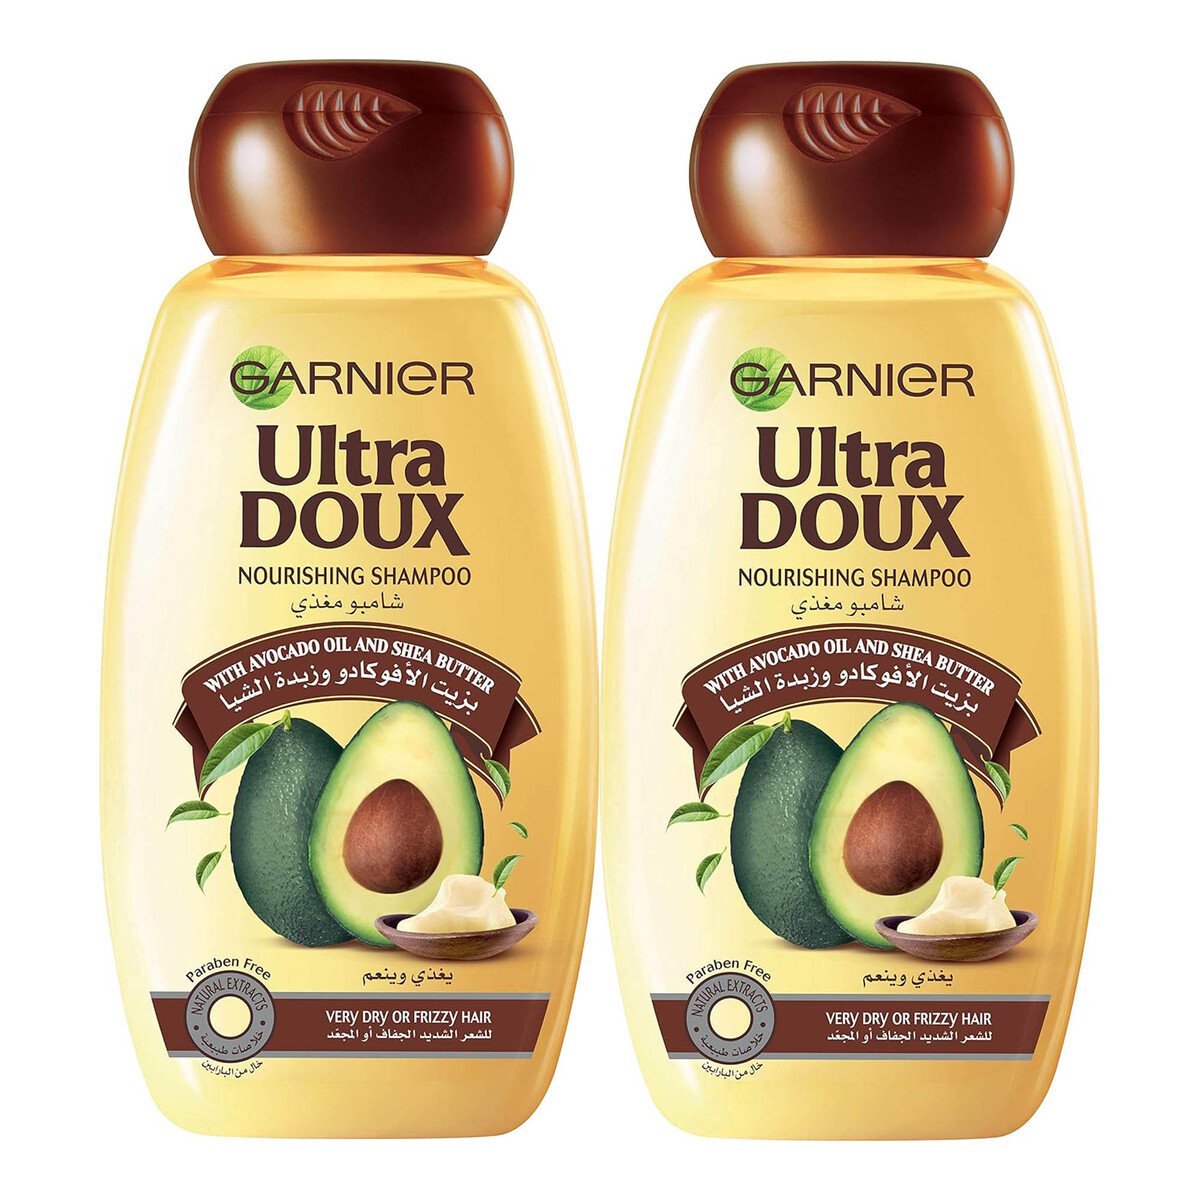 Garnier Ultra Doux Nourishing Shampoo With Avocado Oil And Shea Butter Value Pack 2 x 400 ml